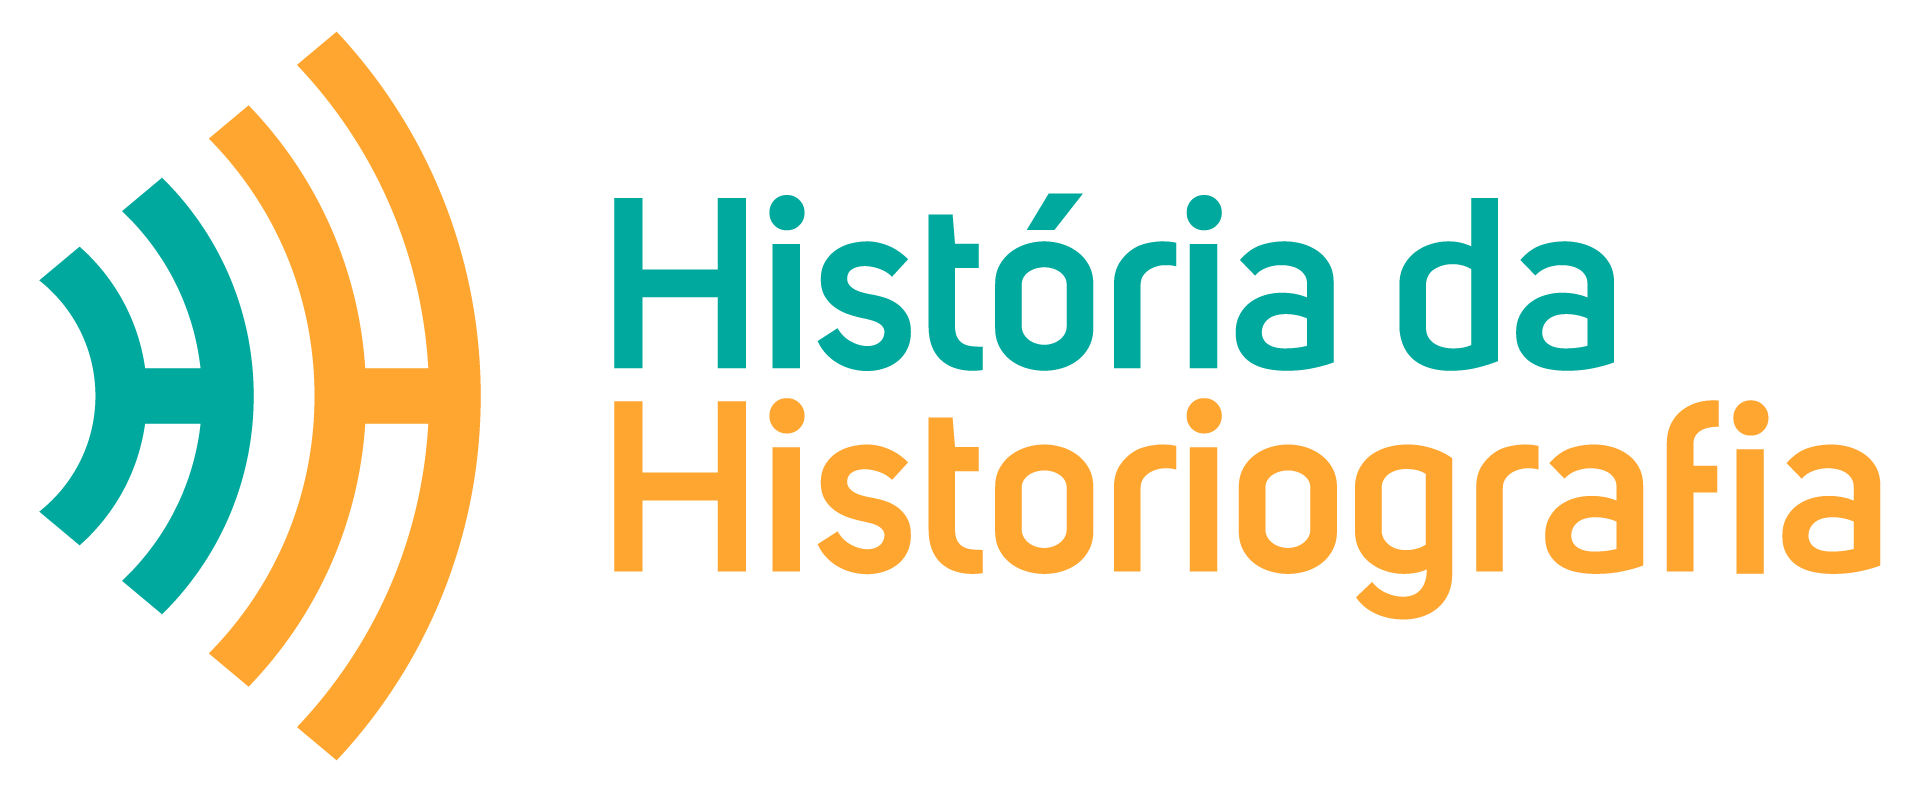 Logomarca do periódico: História da Historiografia